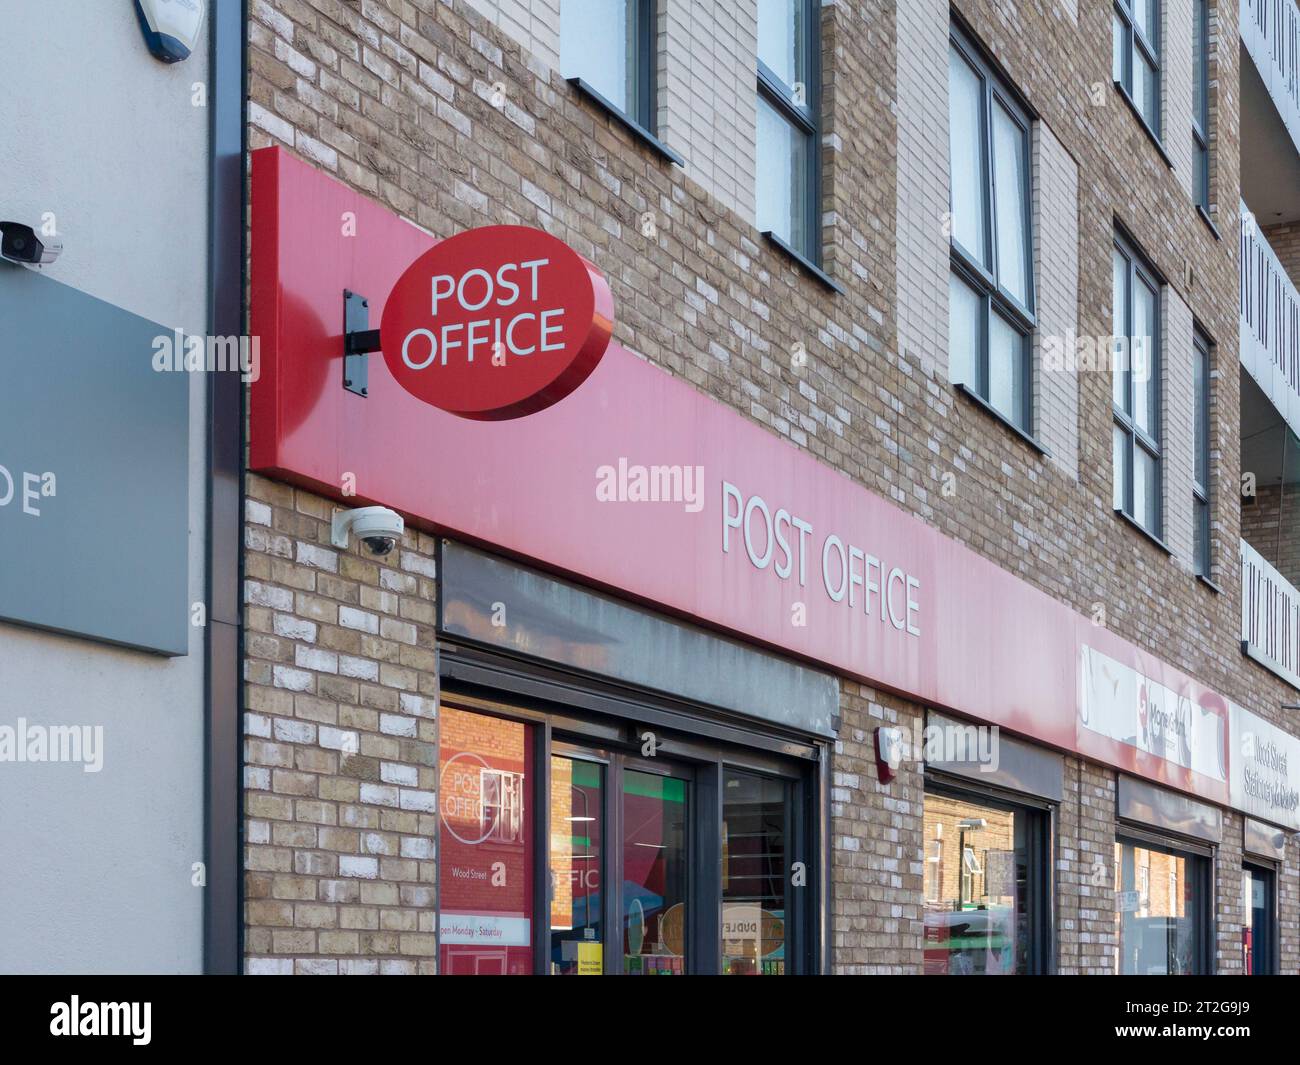 Post office sign, London, UK Stock Photo